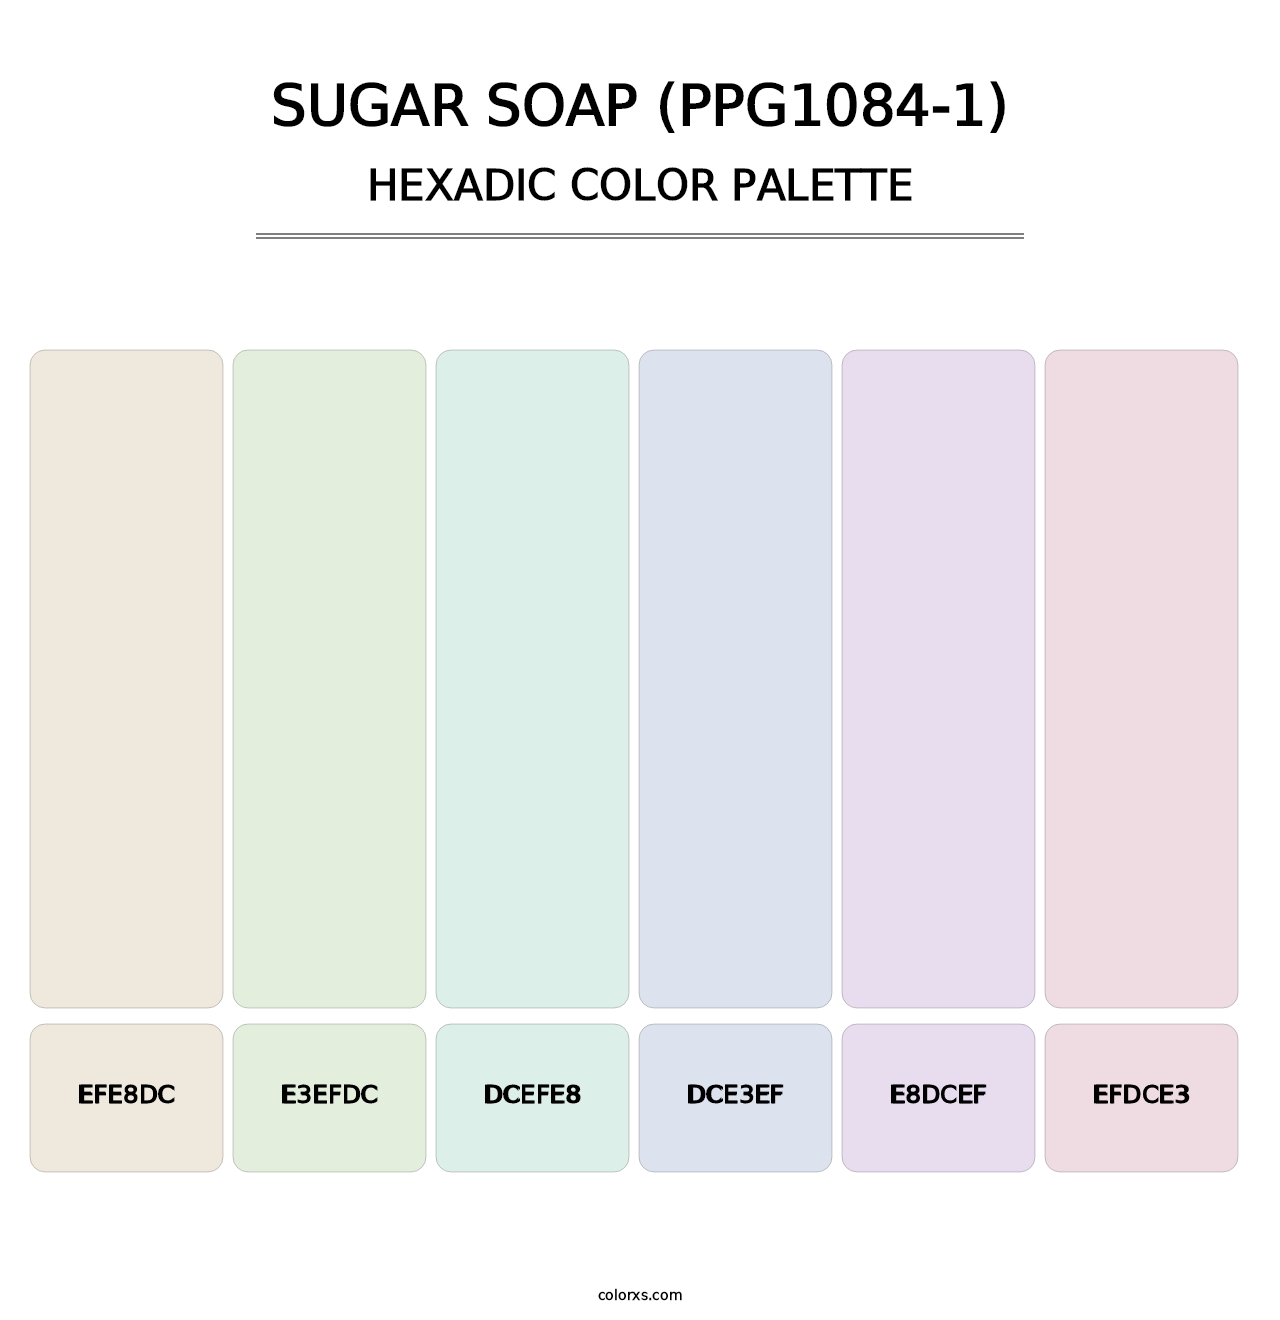 Sugar Soap (PPG1084-1) - Hexadic Color Palette